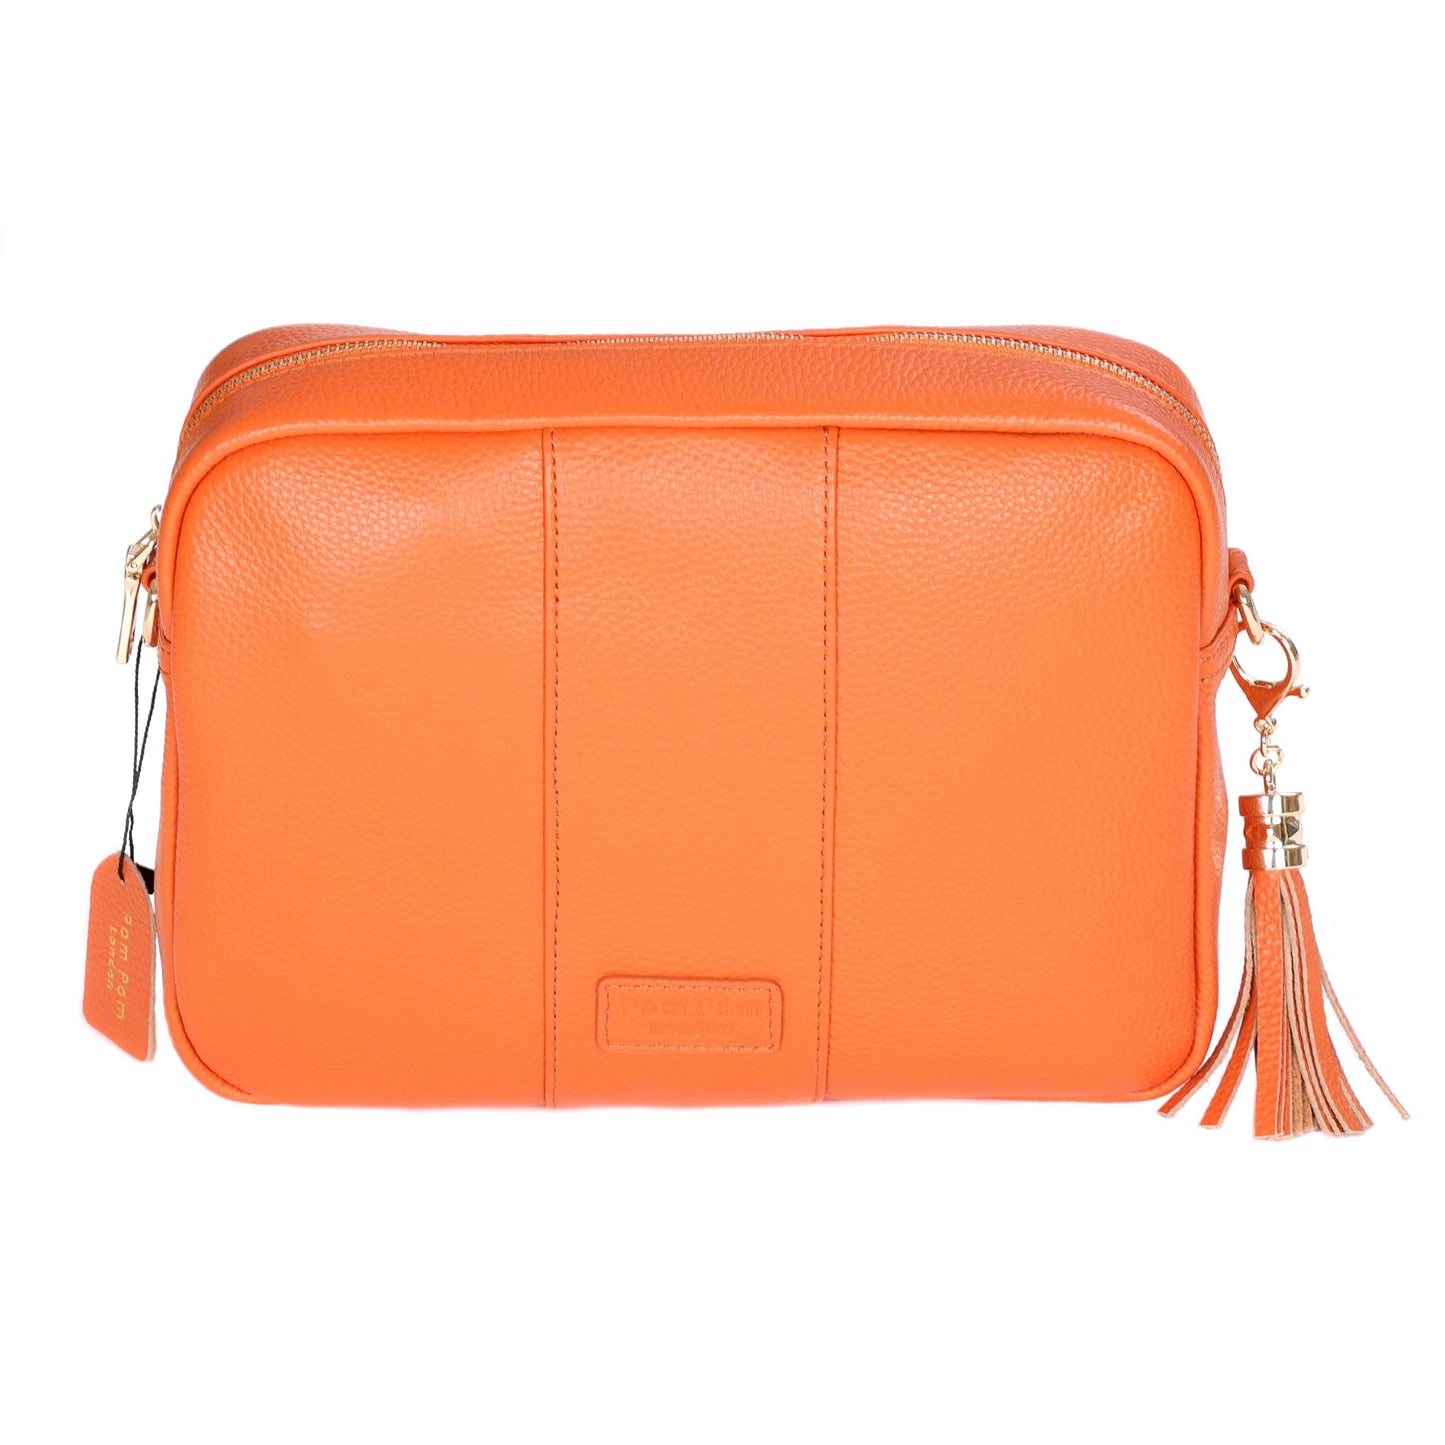 Pom Pom London City Plus Bag Orange & Strap Blue & Orange G